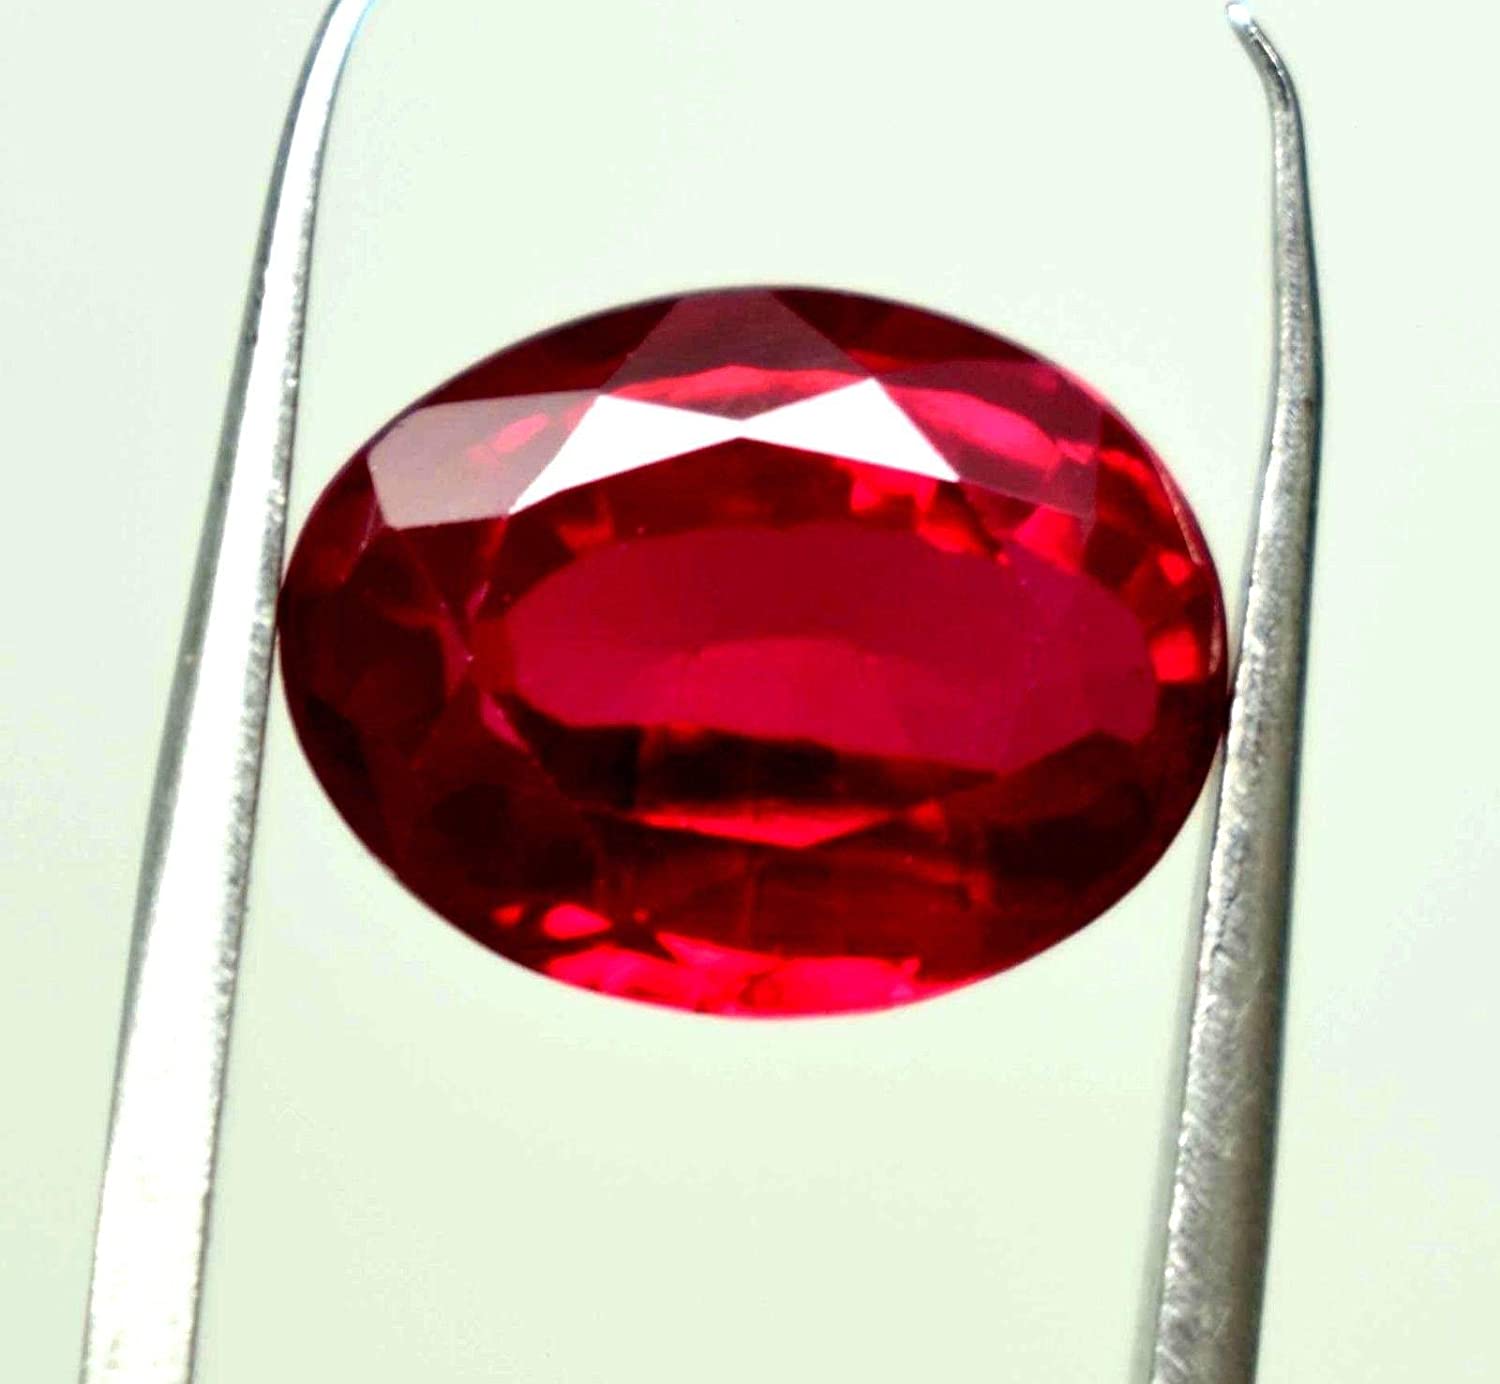 Azagems 7.25 Ratti (6.95 Carat) Ruby (Manikya/Manik/Maanik Stone) 100% Original Certified Natural Gemstone AAA Quality